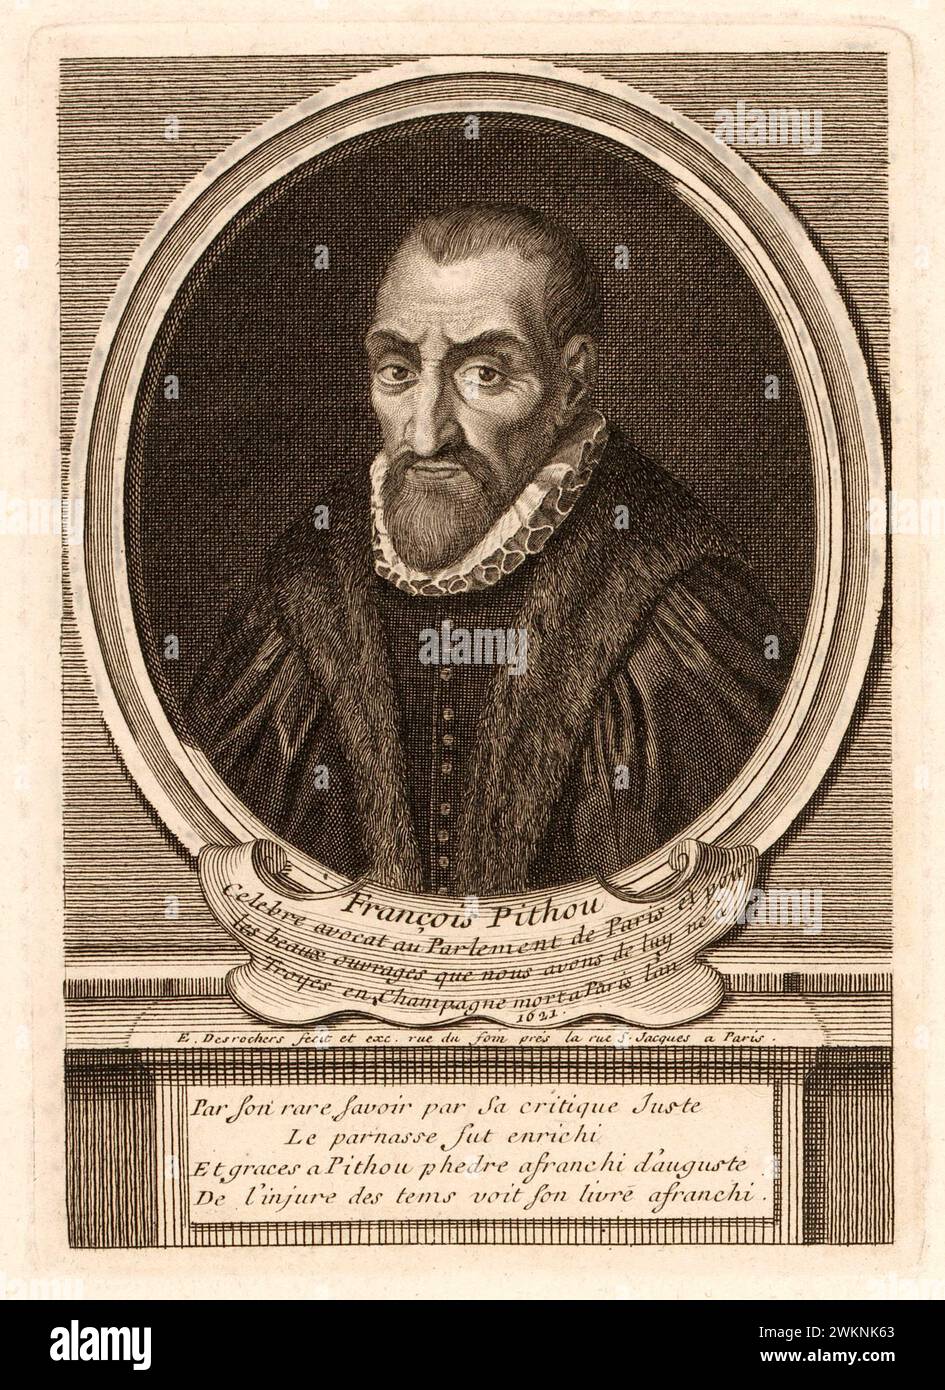 1585 c. , FRANCE : The italian jurist , historian and writer  François PITHOU ( 1543 - 1621 ), young bother of  Pierre Pithou ( 1543 - 1596 ). Portrait engraved by  Etienne Desrochers , pubblished in 1726 c. , Paris . - HISTORY - FOTO STORICHE - HISTORIAN - STORICO - SCRITTORE - WRITER - LETTERATURA - LITERATURE - giureconsulto - GIURISTA - LEGGE - LAY - nobili - nobiltà francese - french nobility - FRANCIA - INCISIONE - ENGRAVING - ILLUSTRATION - ILLUSTRAZIONE  - collar - collare - colletto - GORGIERA - pizzo - lace -   beard - barba --- Archivio GBB Stock Photo